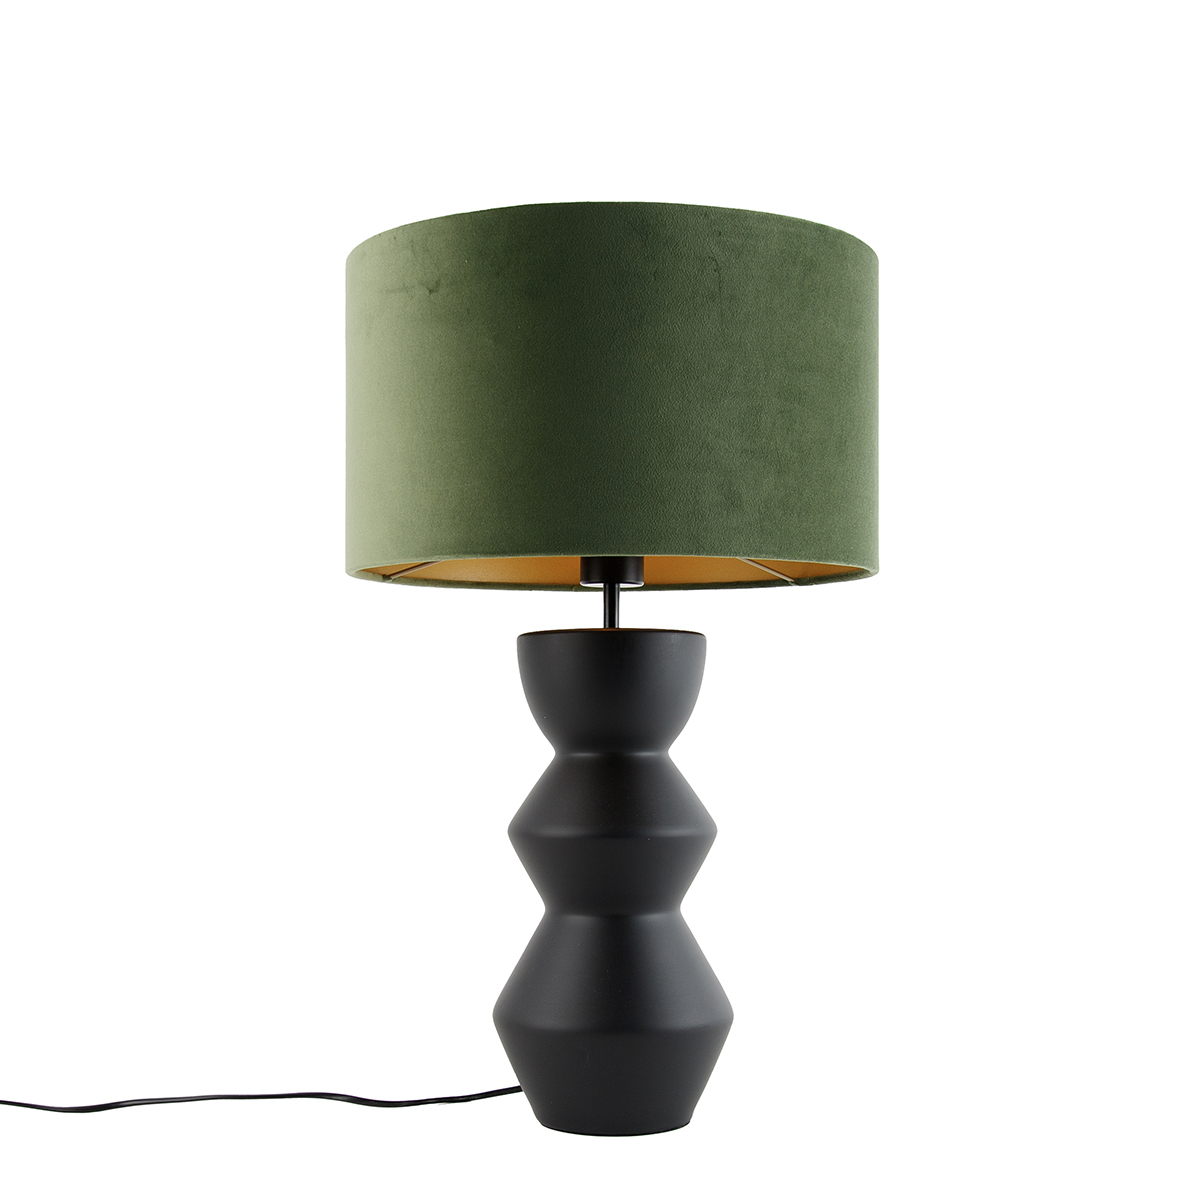 Design tafellamp zwart velours kap groen met goud 35 cm - Alisia